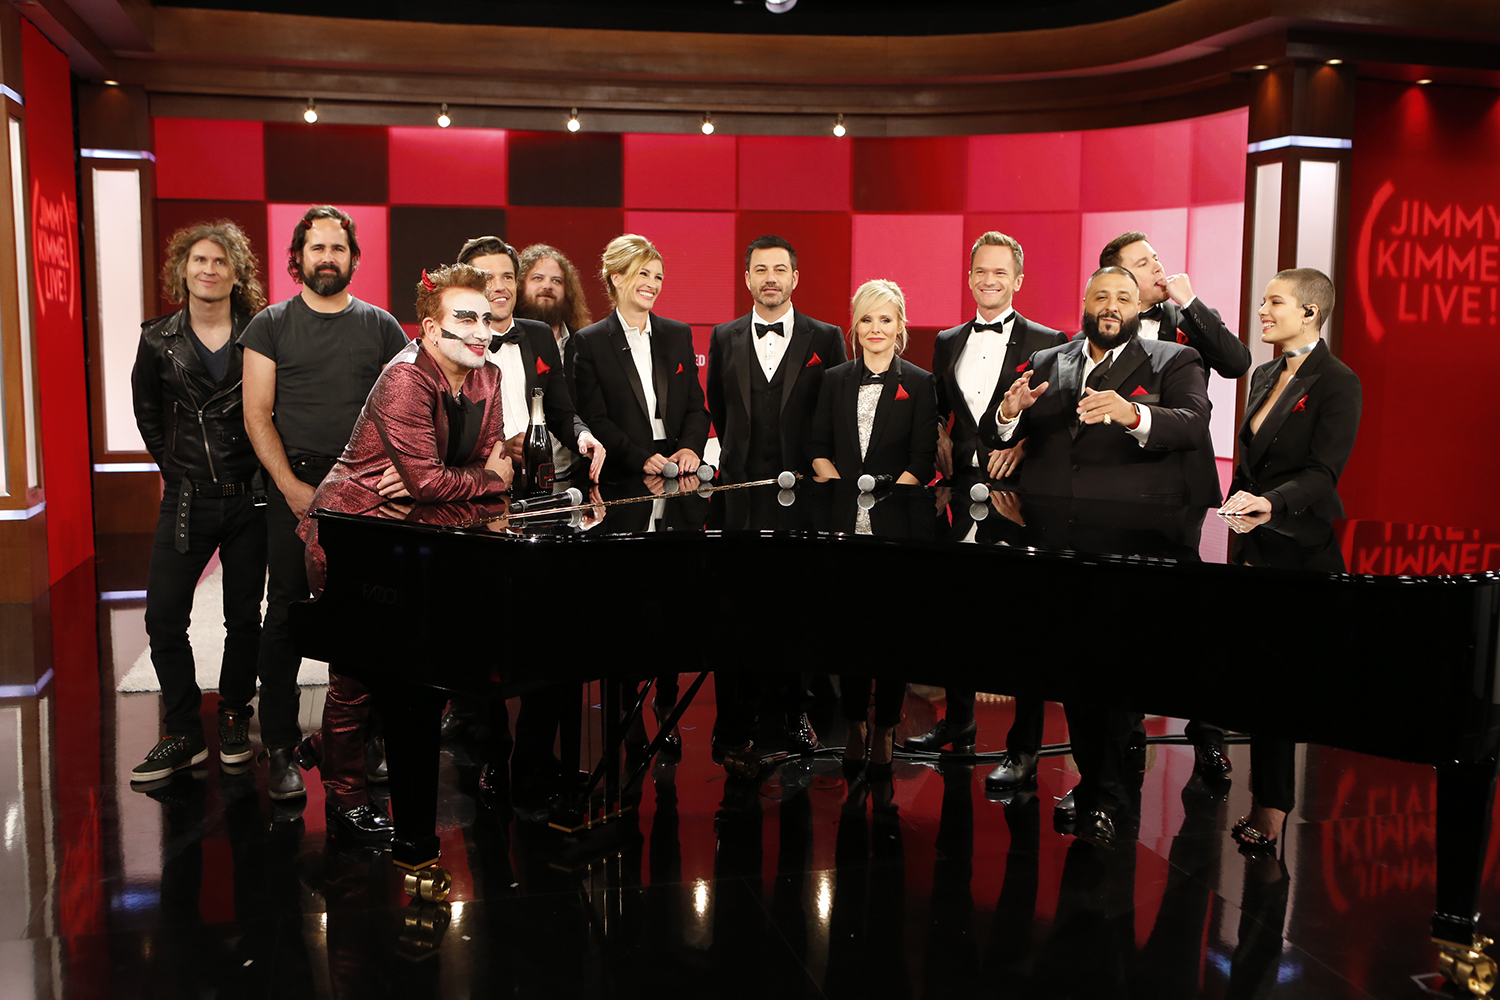 Jimmy Kimmel Live Red Episode [Photo via FYI]